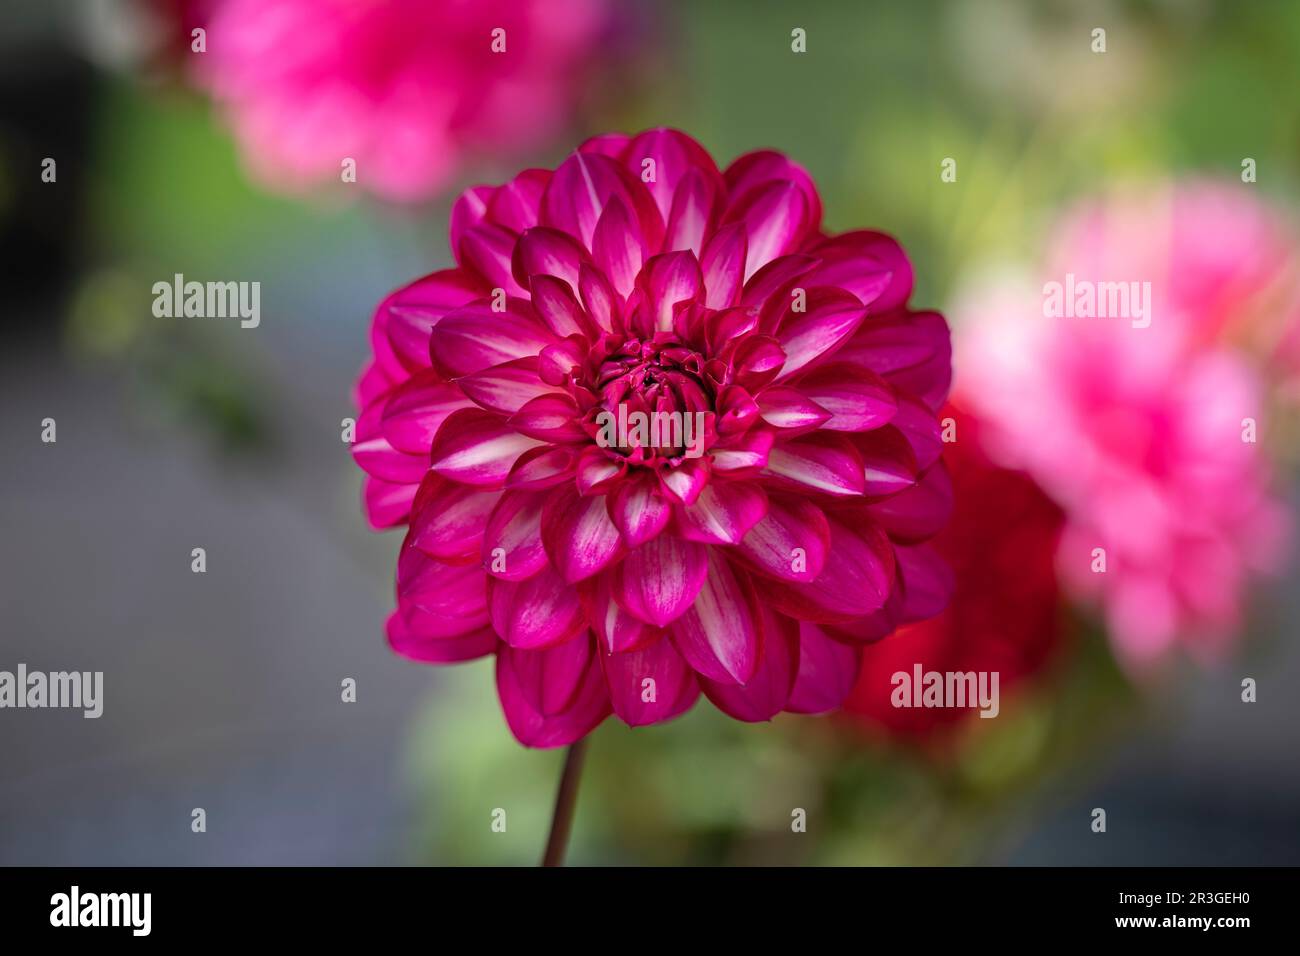 Single dhalia flower in thge garden Stock Photo